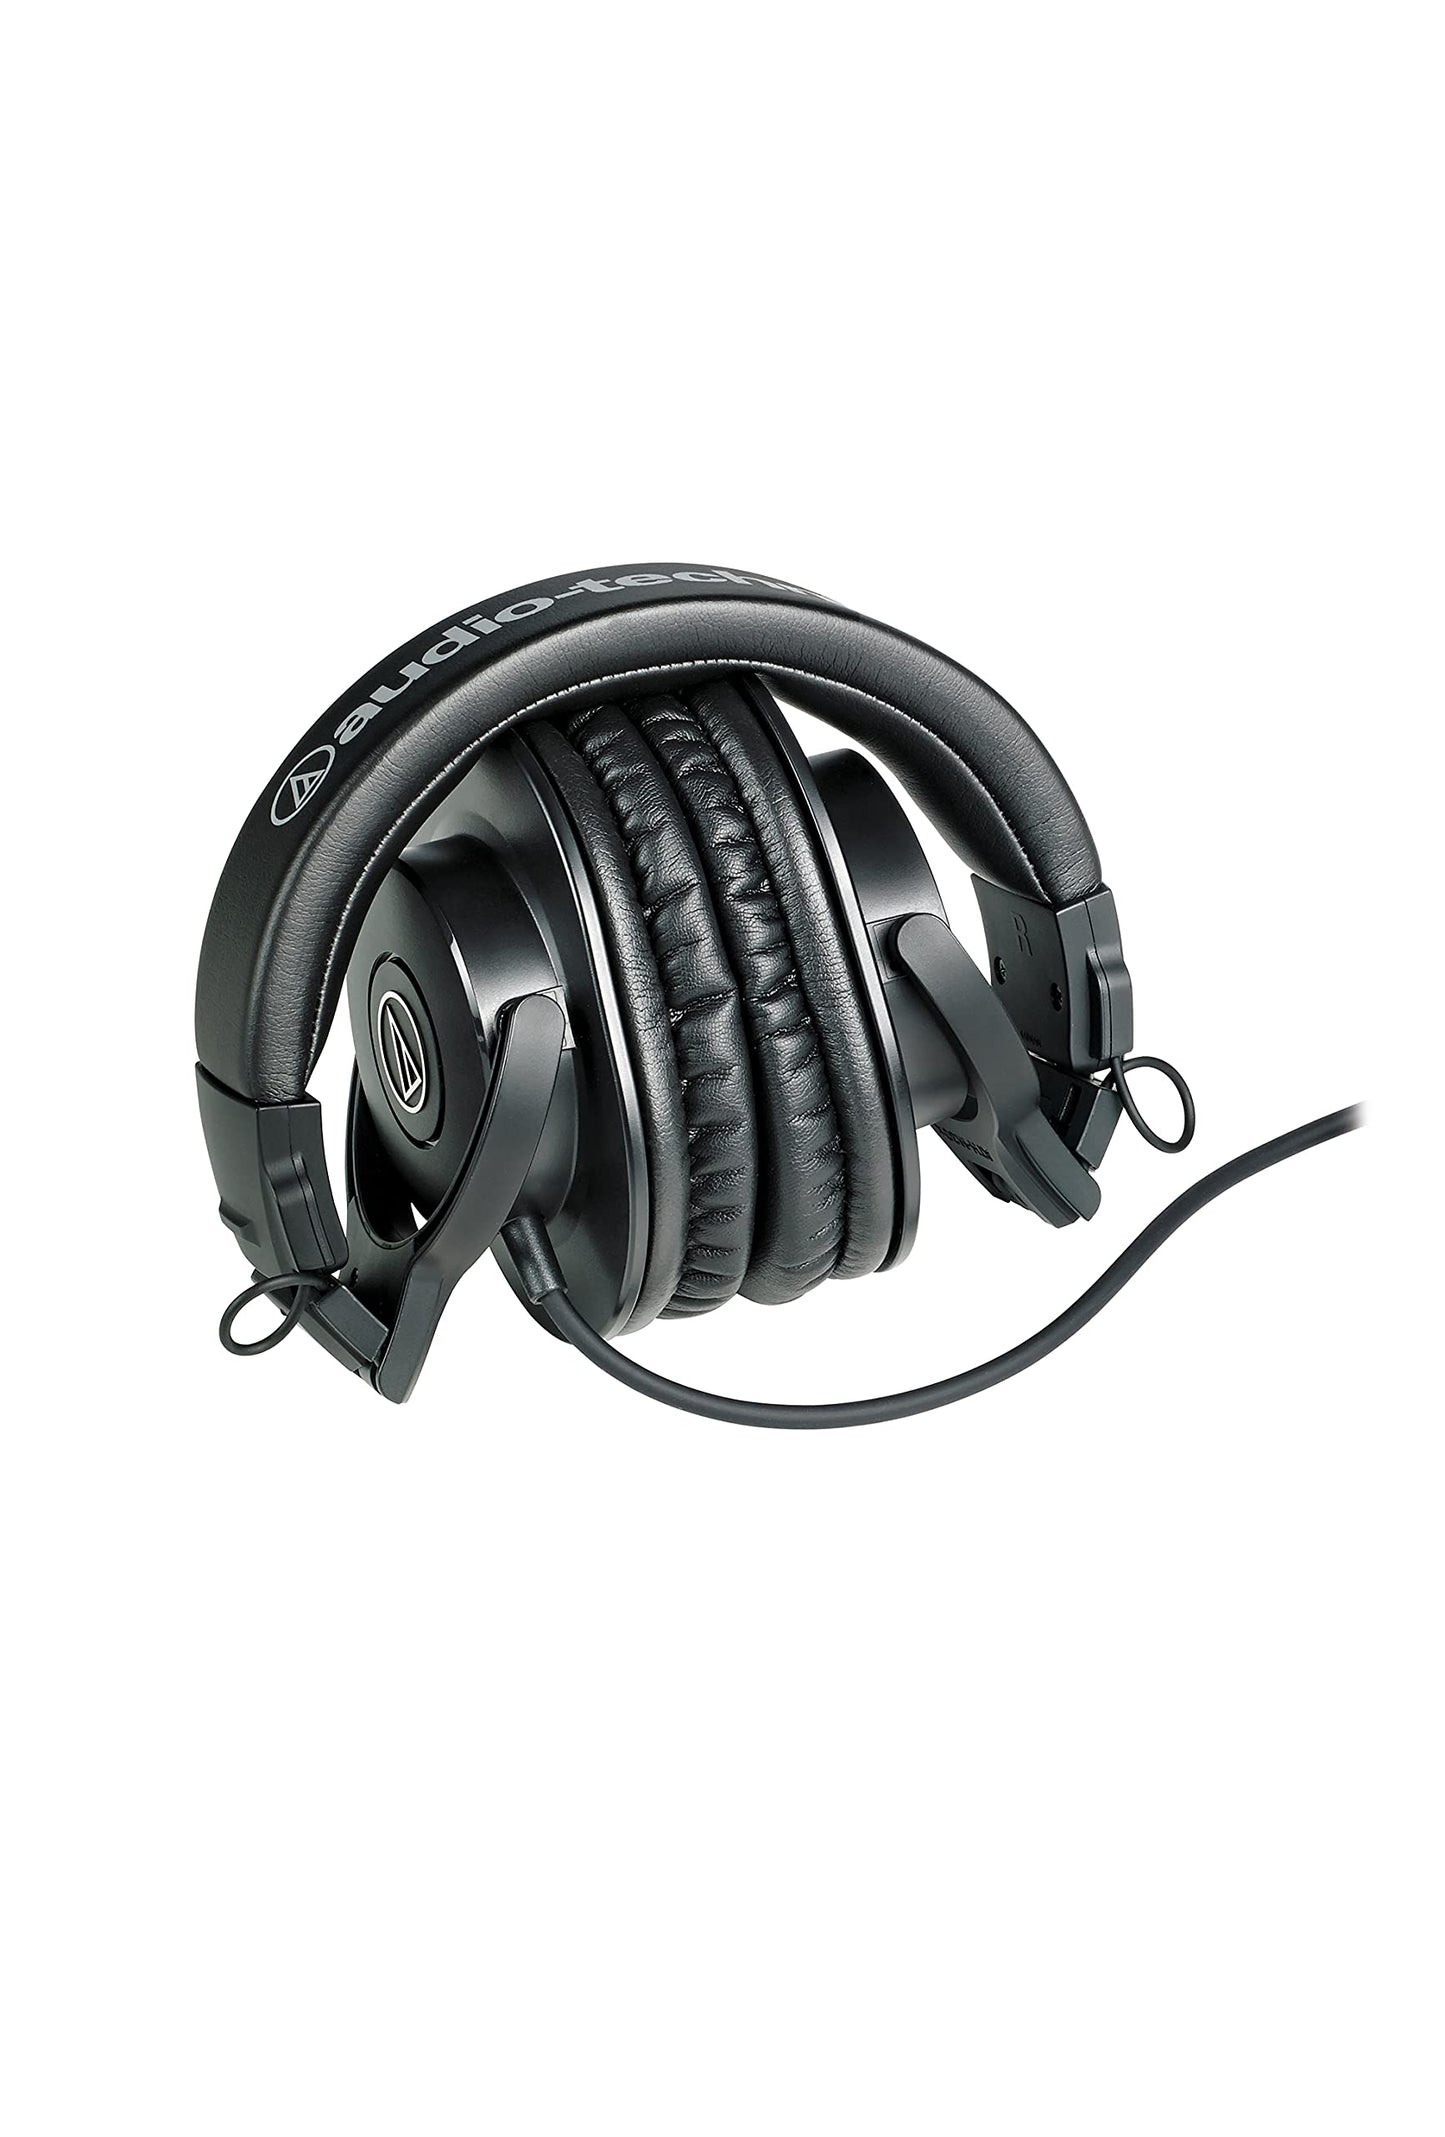 Audio-Technica ATH-M30X Professional Studio Monitor Headphones - Black